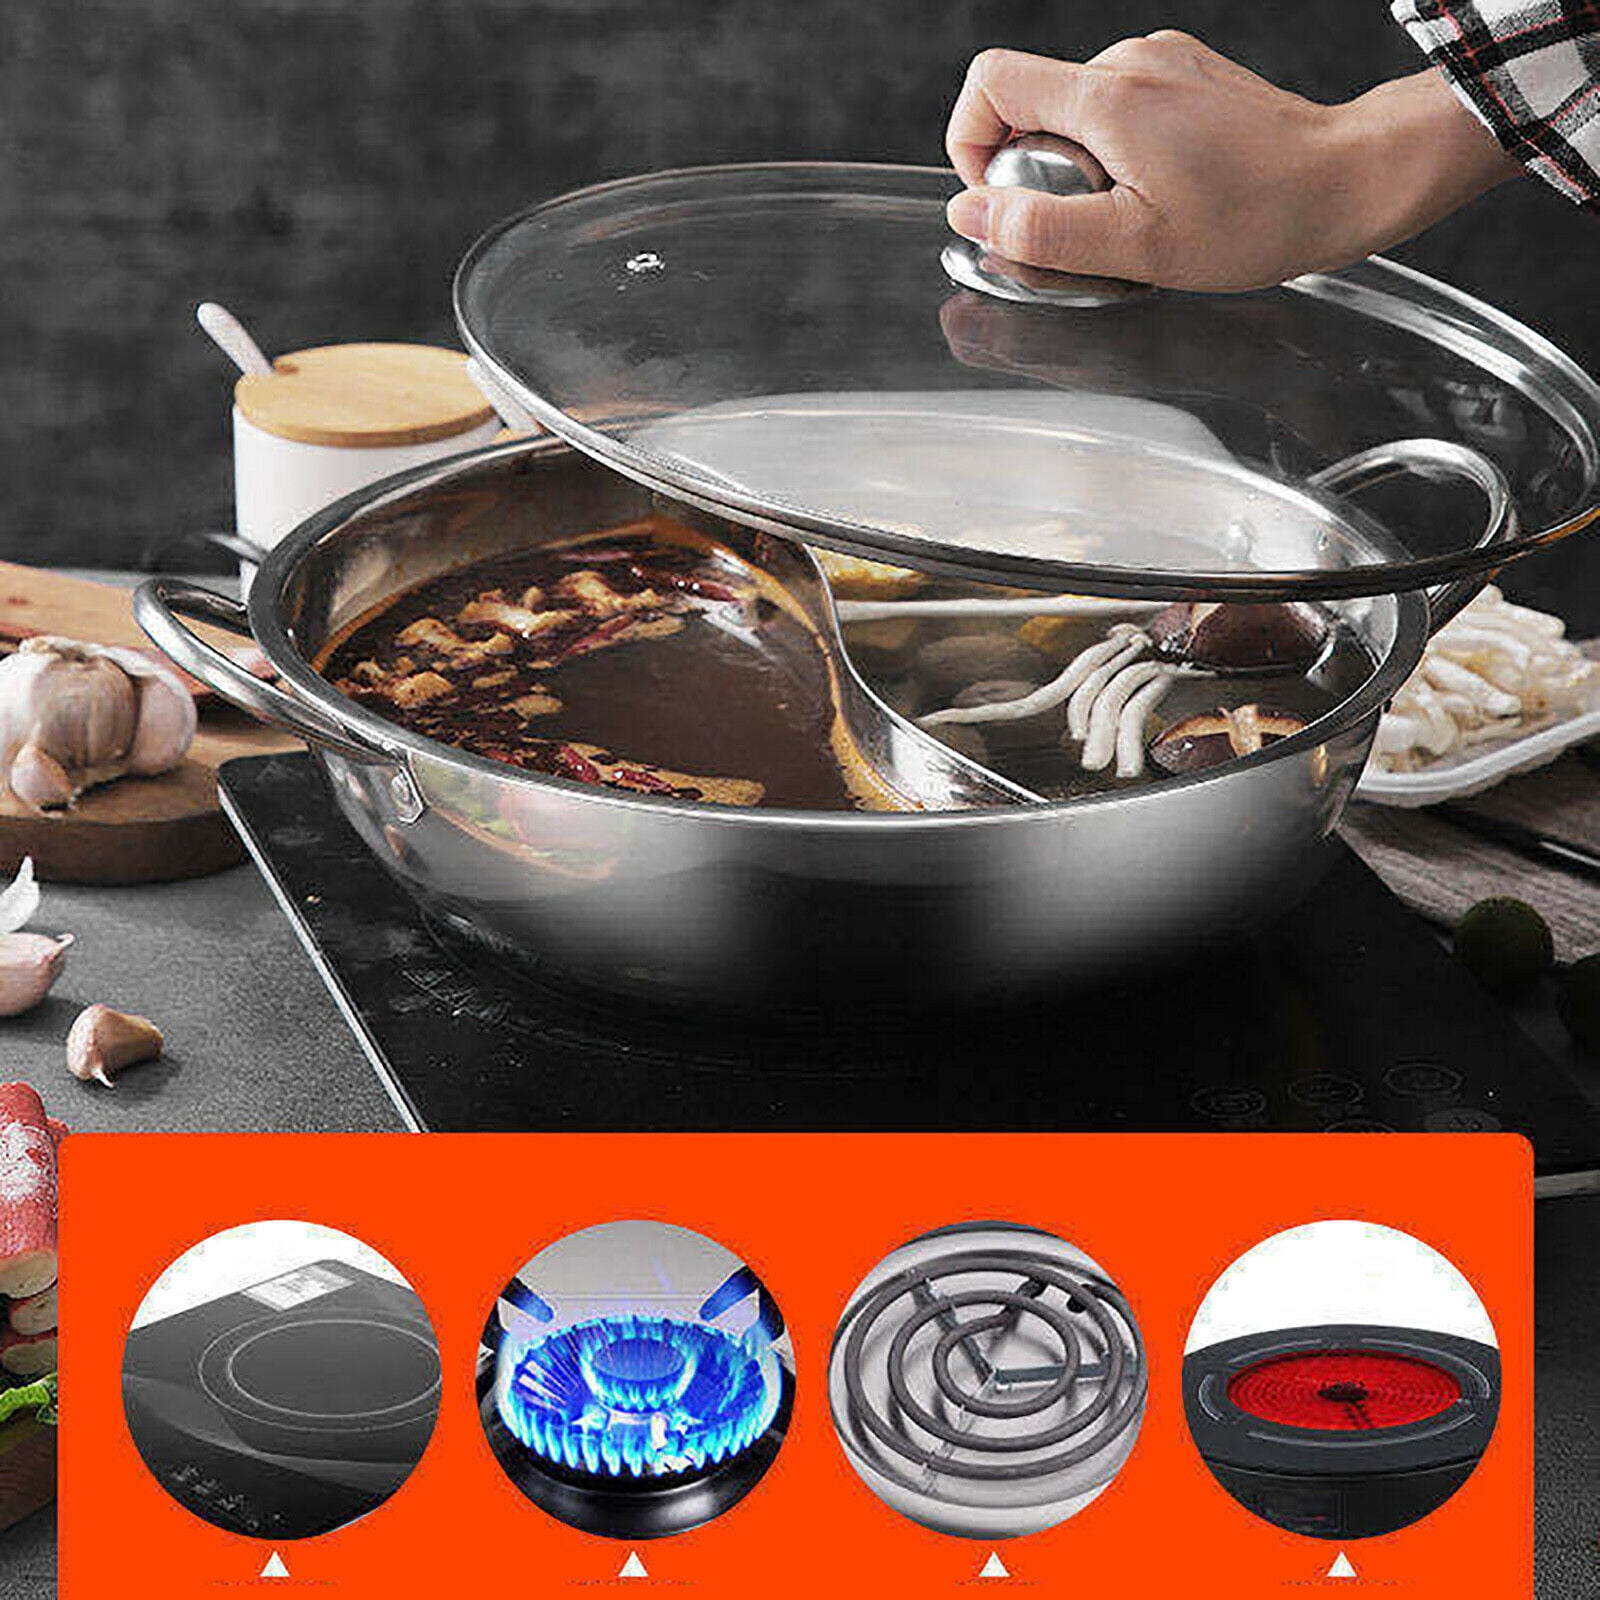 Cookin IH Shabu Shabu Divider Hot Pot, Induction Cooktop, Ceramic Coating, Double Sauce Pot, 11 inch